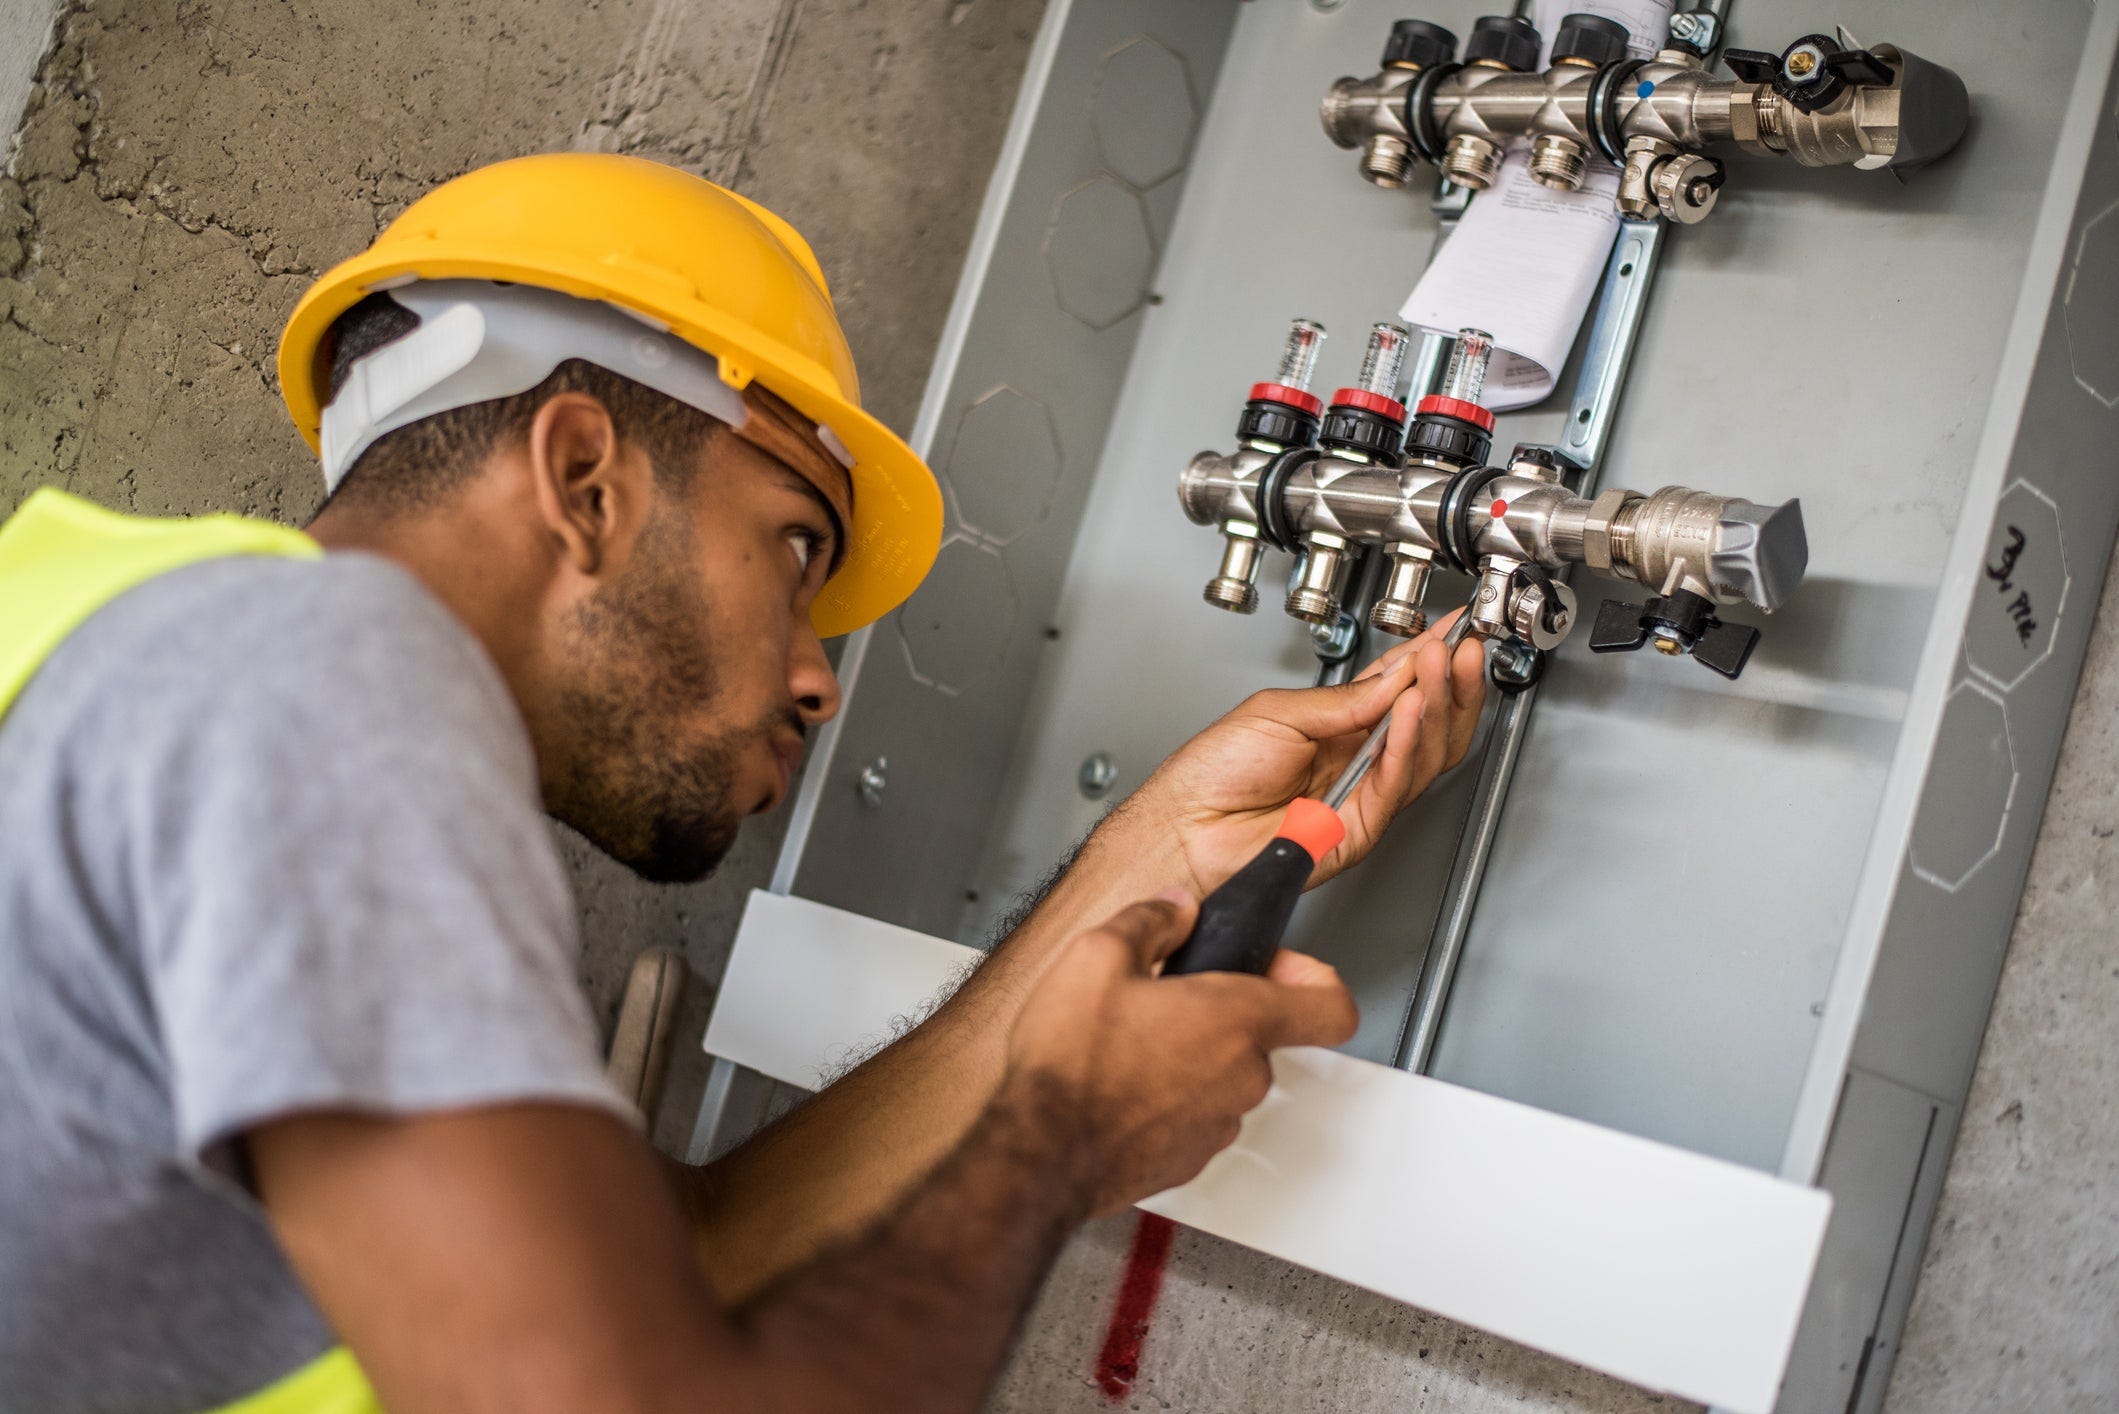 TSTC testing program aims for training more plumbers